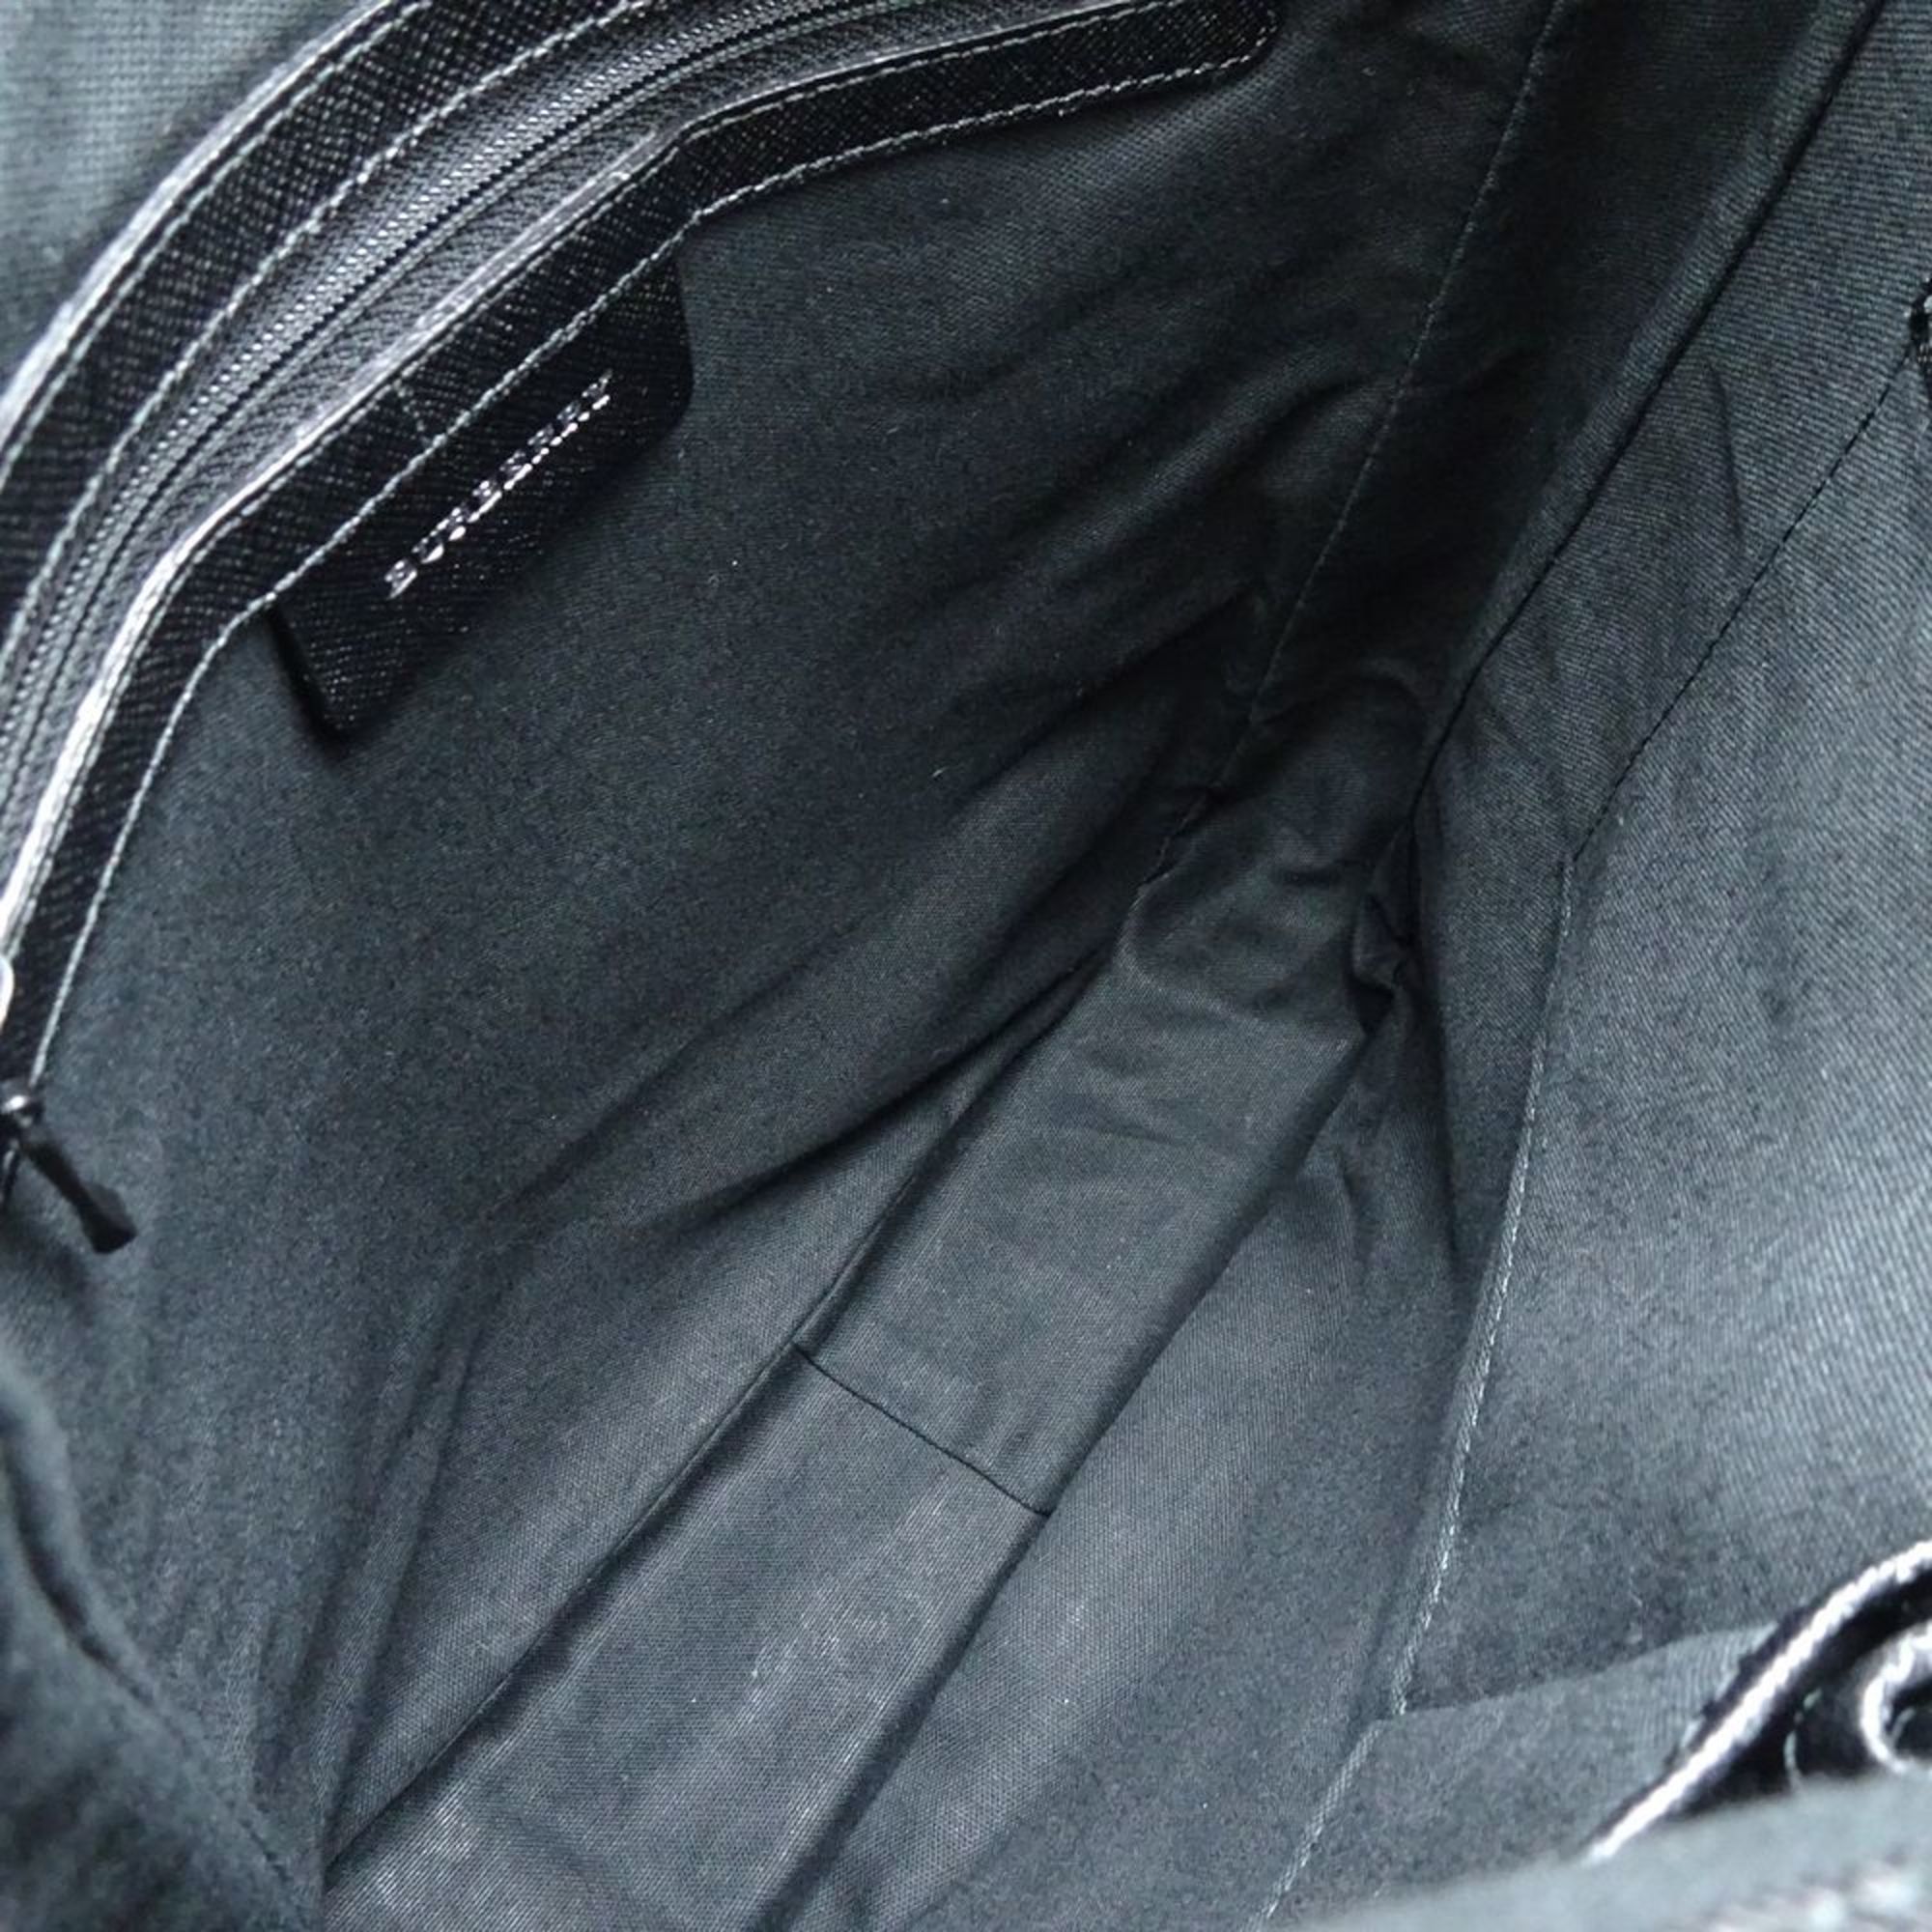 BURBERRY Shoulder bag Nova check canvas x leather beige black 351289